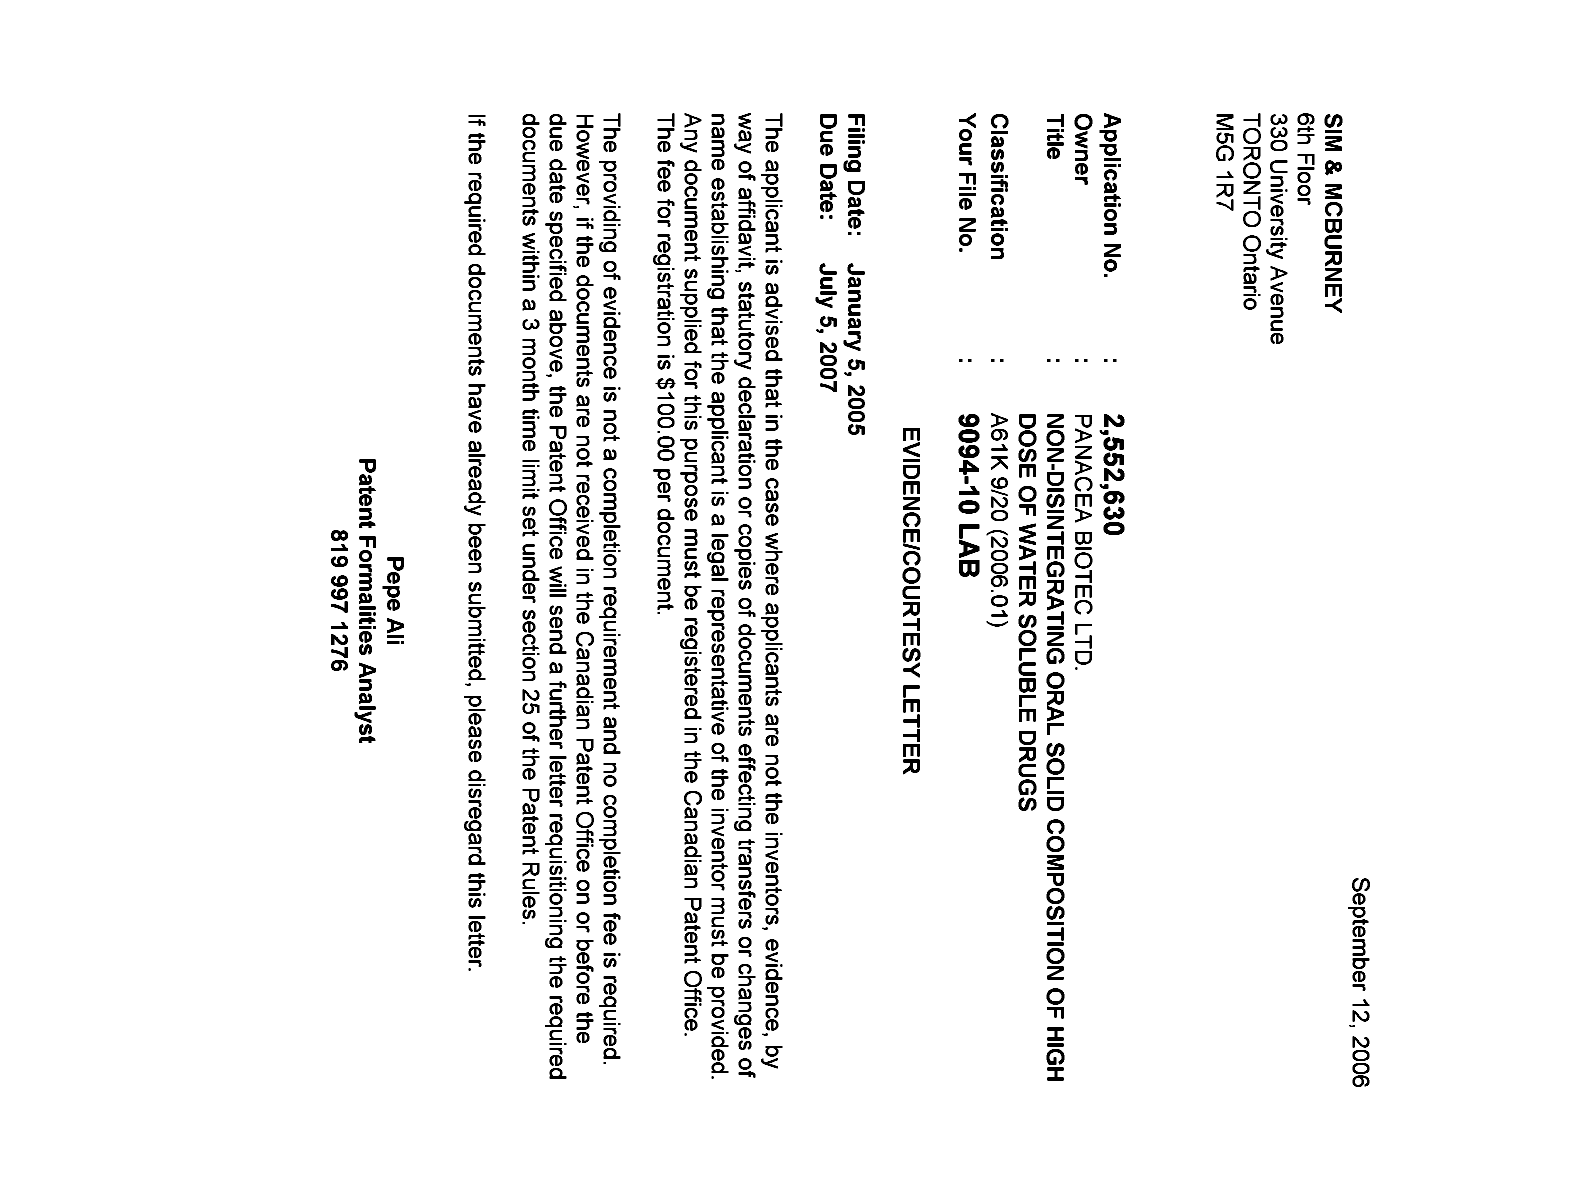 Canadian Patent Document 2552630. Correspondence 20060908. Image 1 of 1